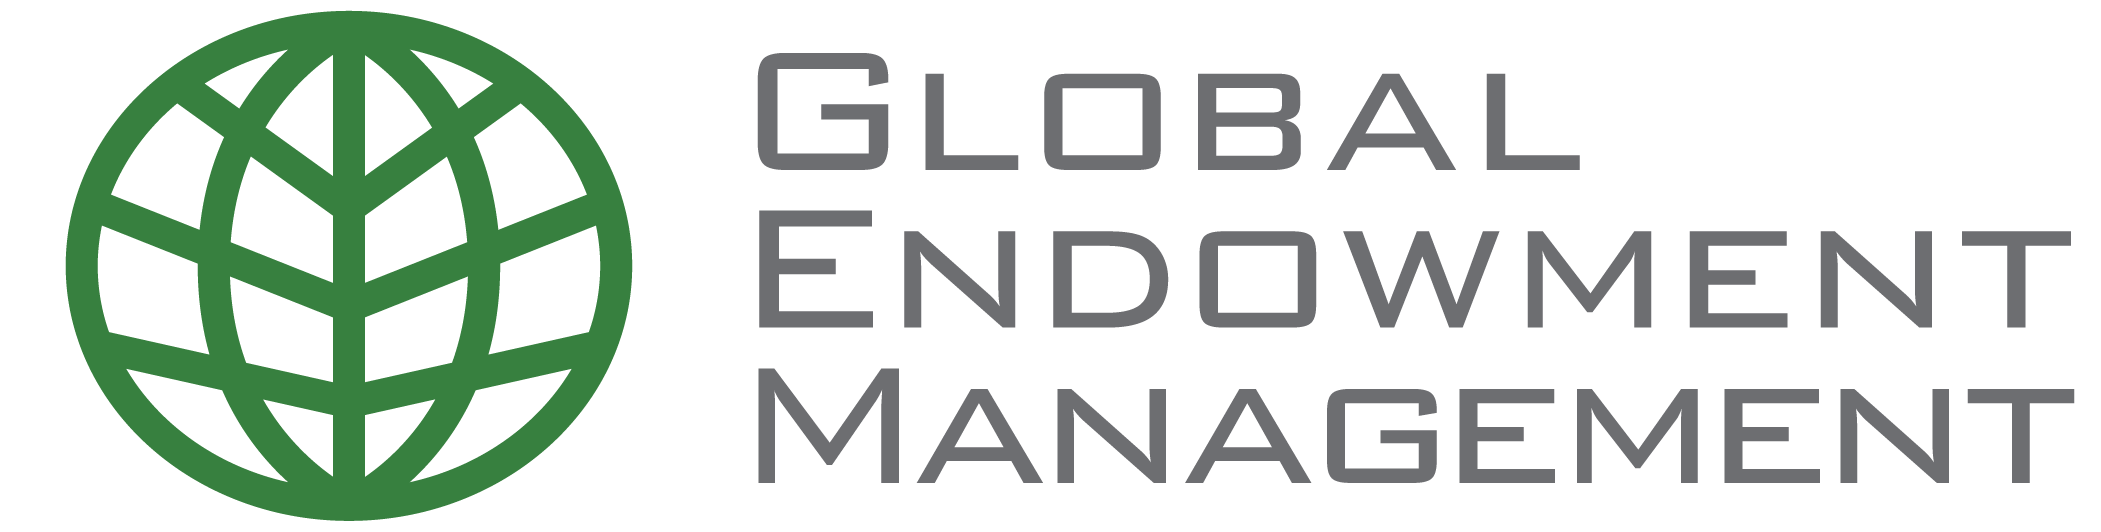 Logo - Global Endowment Management (2020)